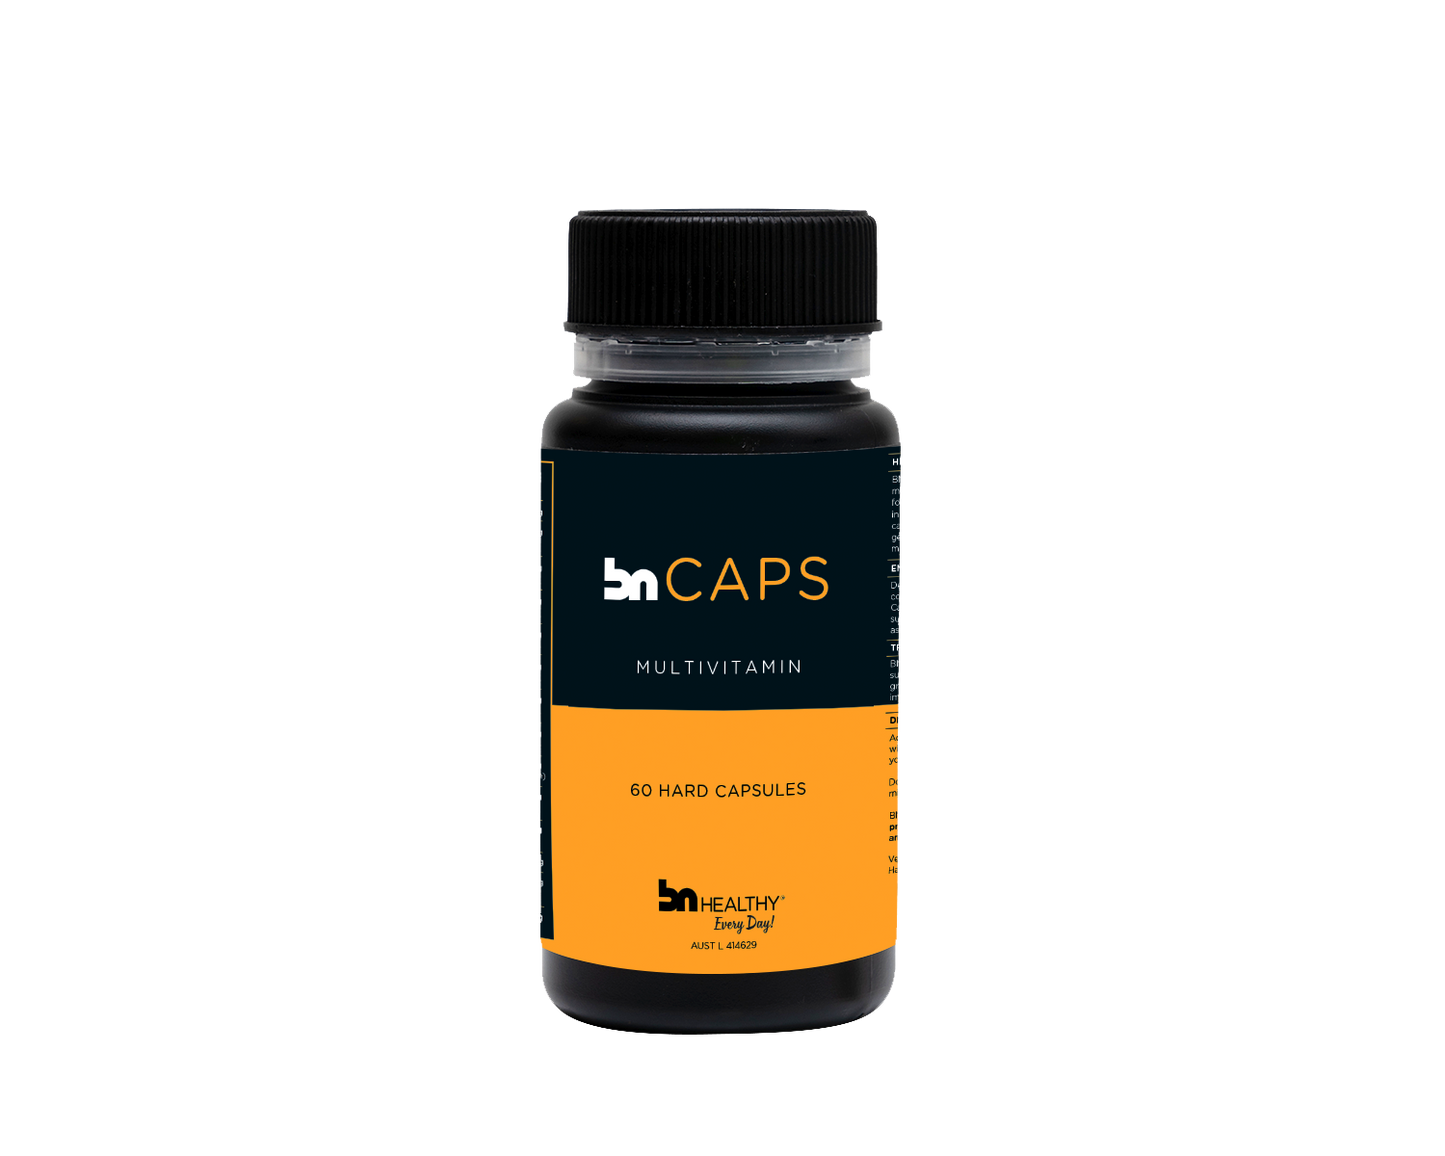 BN Caps - Multivitamin Capsules - 12 Month Subscription - Save 28%